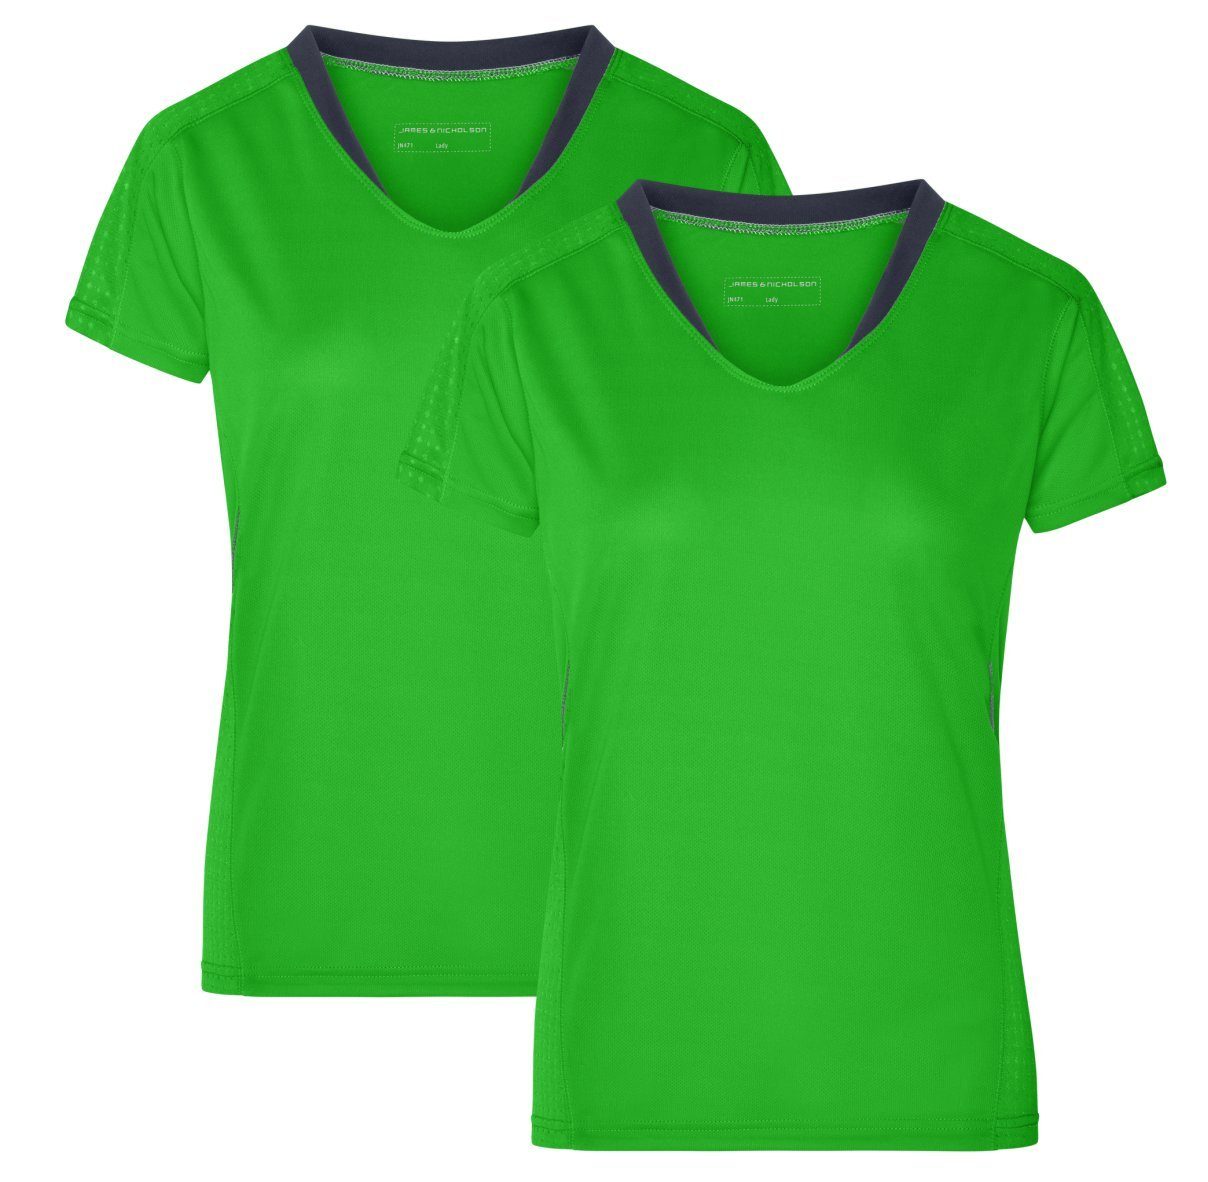 James & Nicholson Laufshirt Atmungsaktiv Running Laufshirt Damen (Doppelpack, T-Shirt Feuchtigkeitsregulierend Kurzarm und 2 Stück) JN471 green/iron-grey Doppelpack